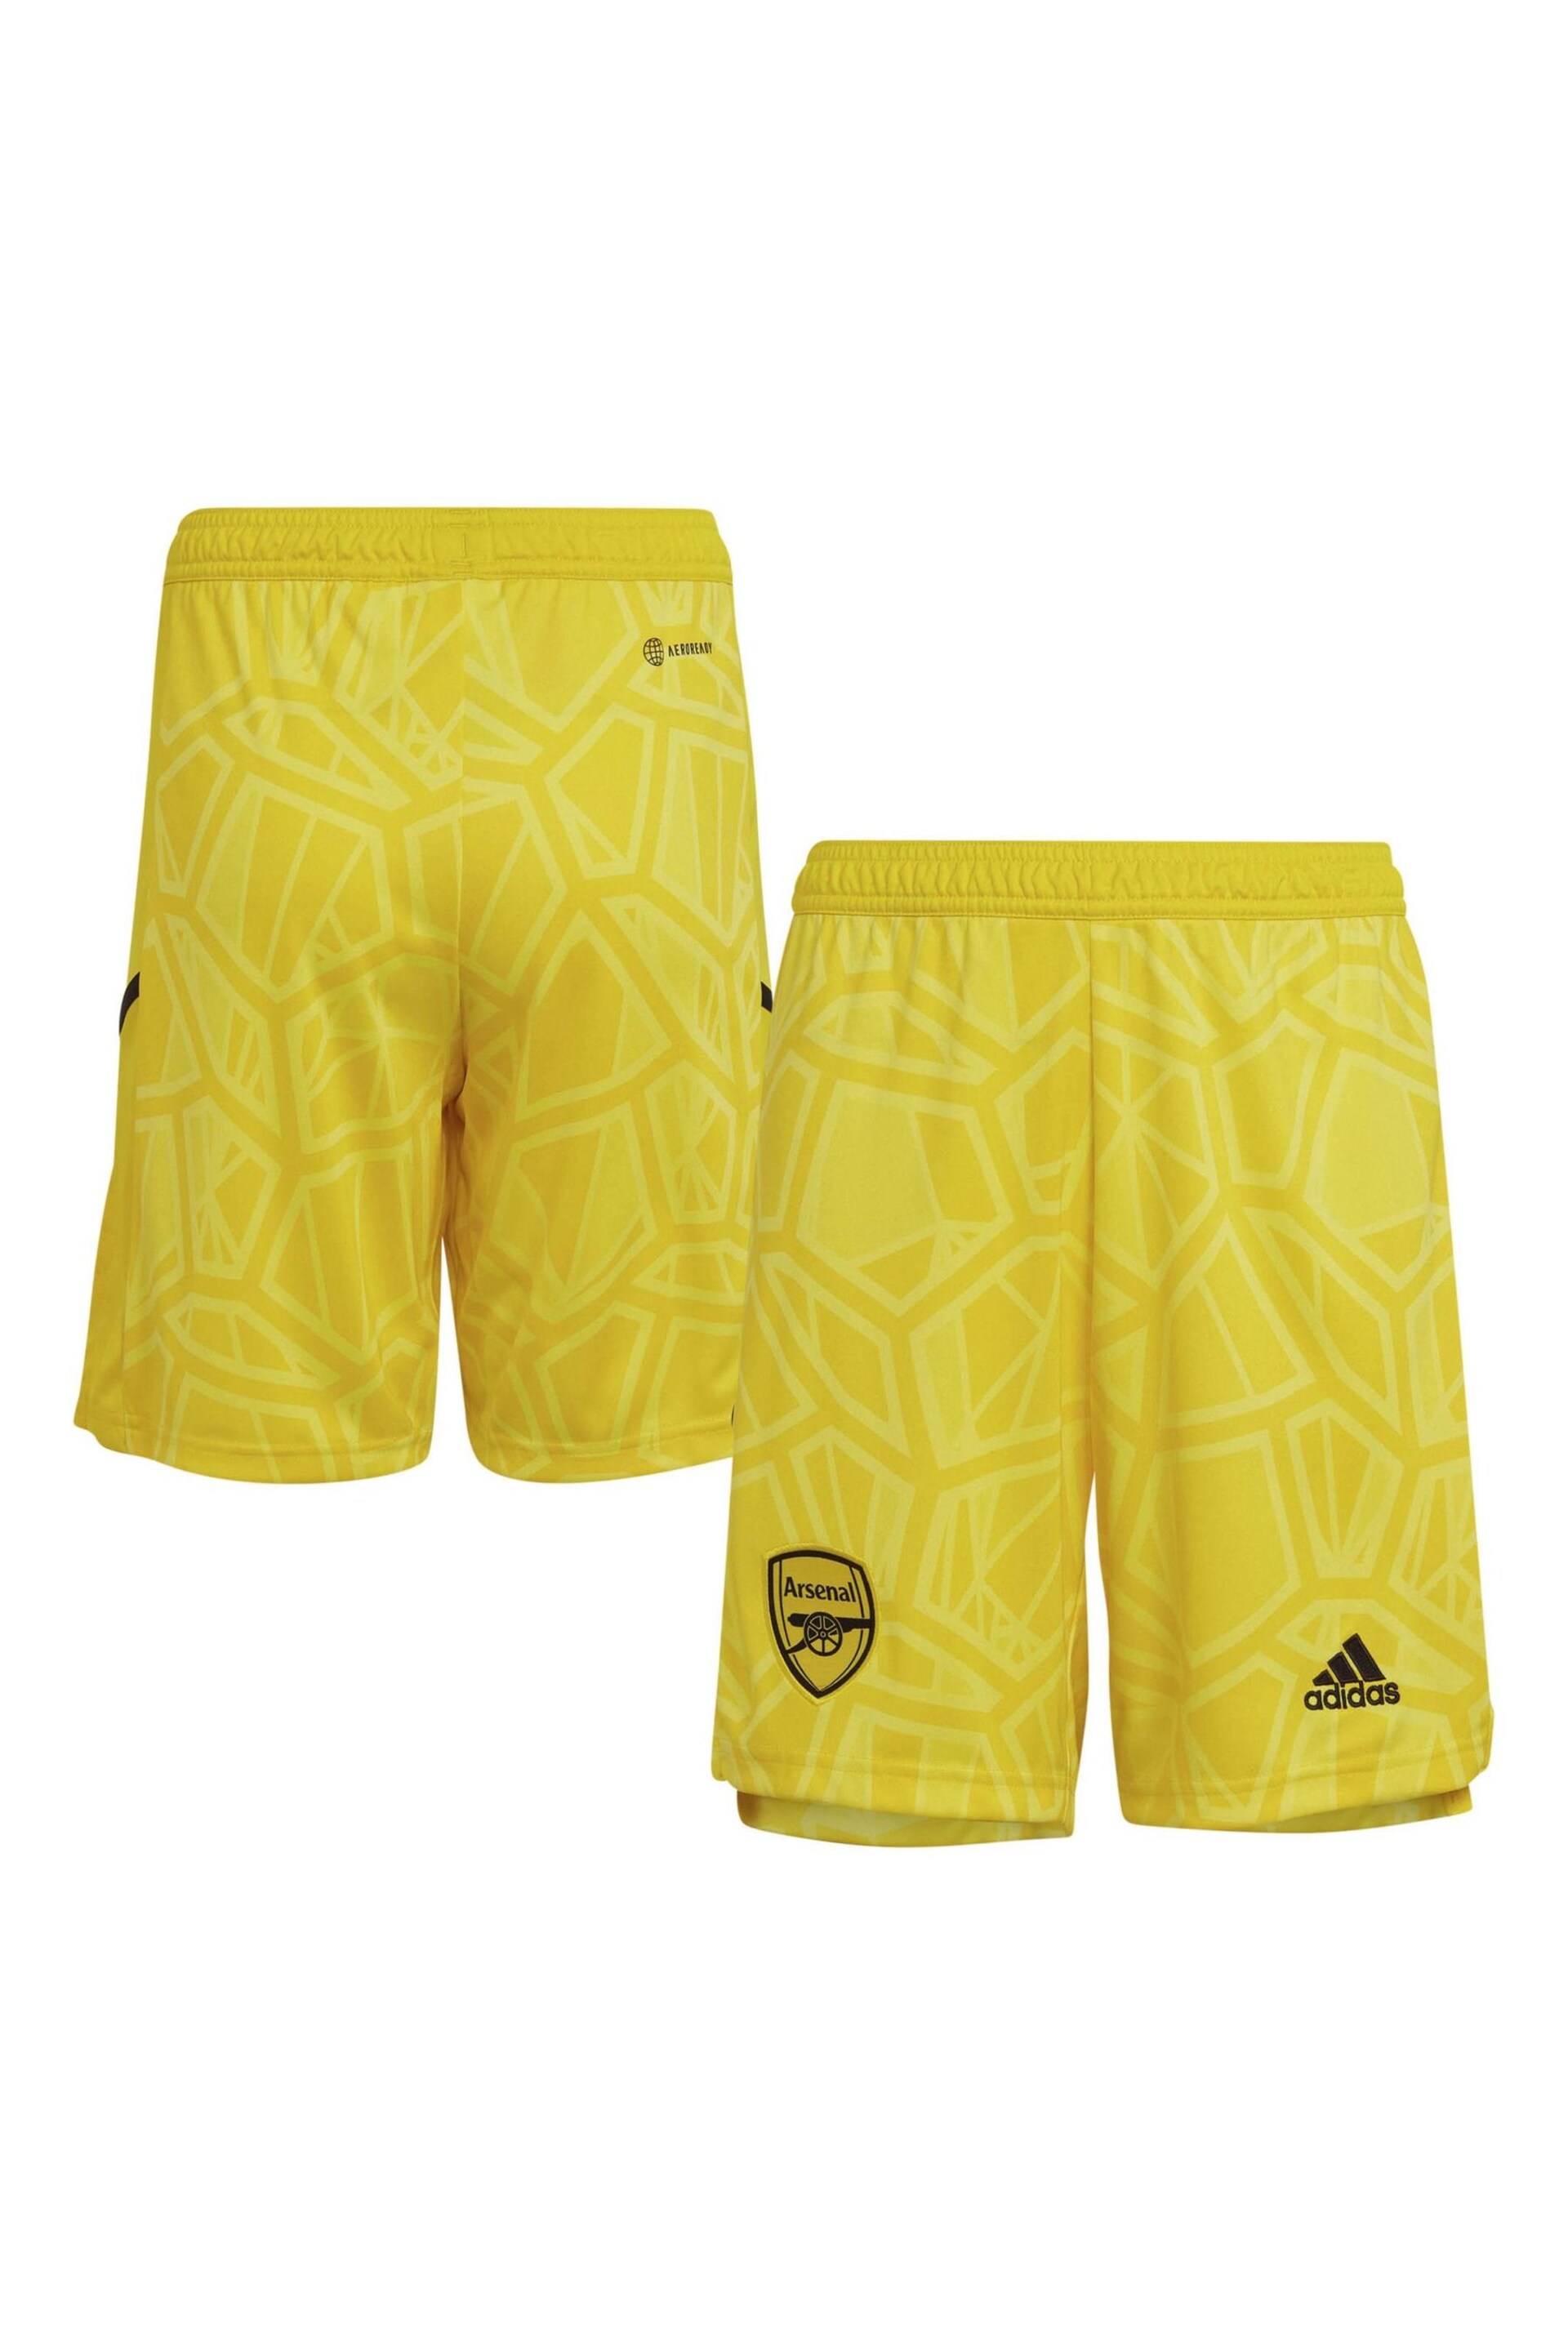 adidas Yellow Arsenal Home Goalkeeper Shorts - Image 1 of 3